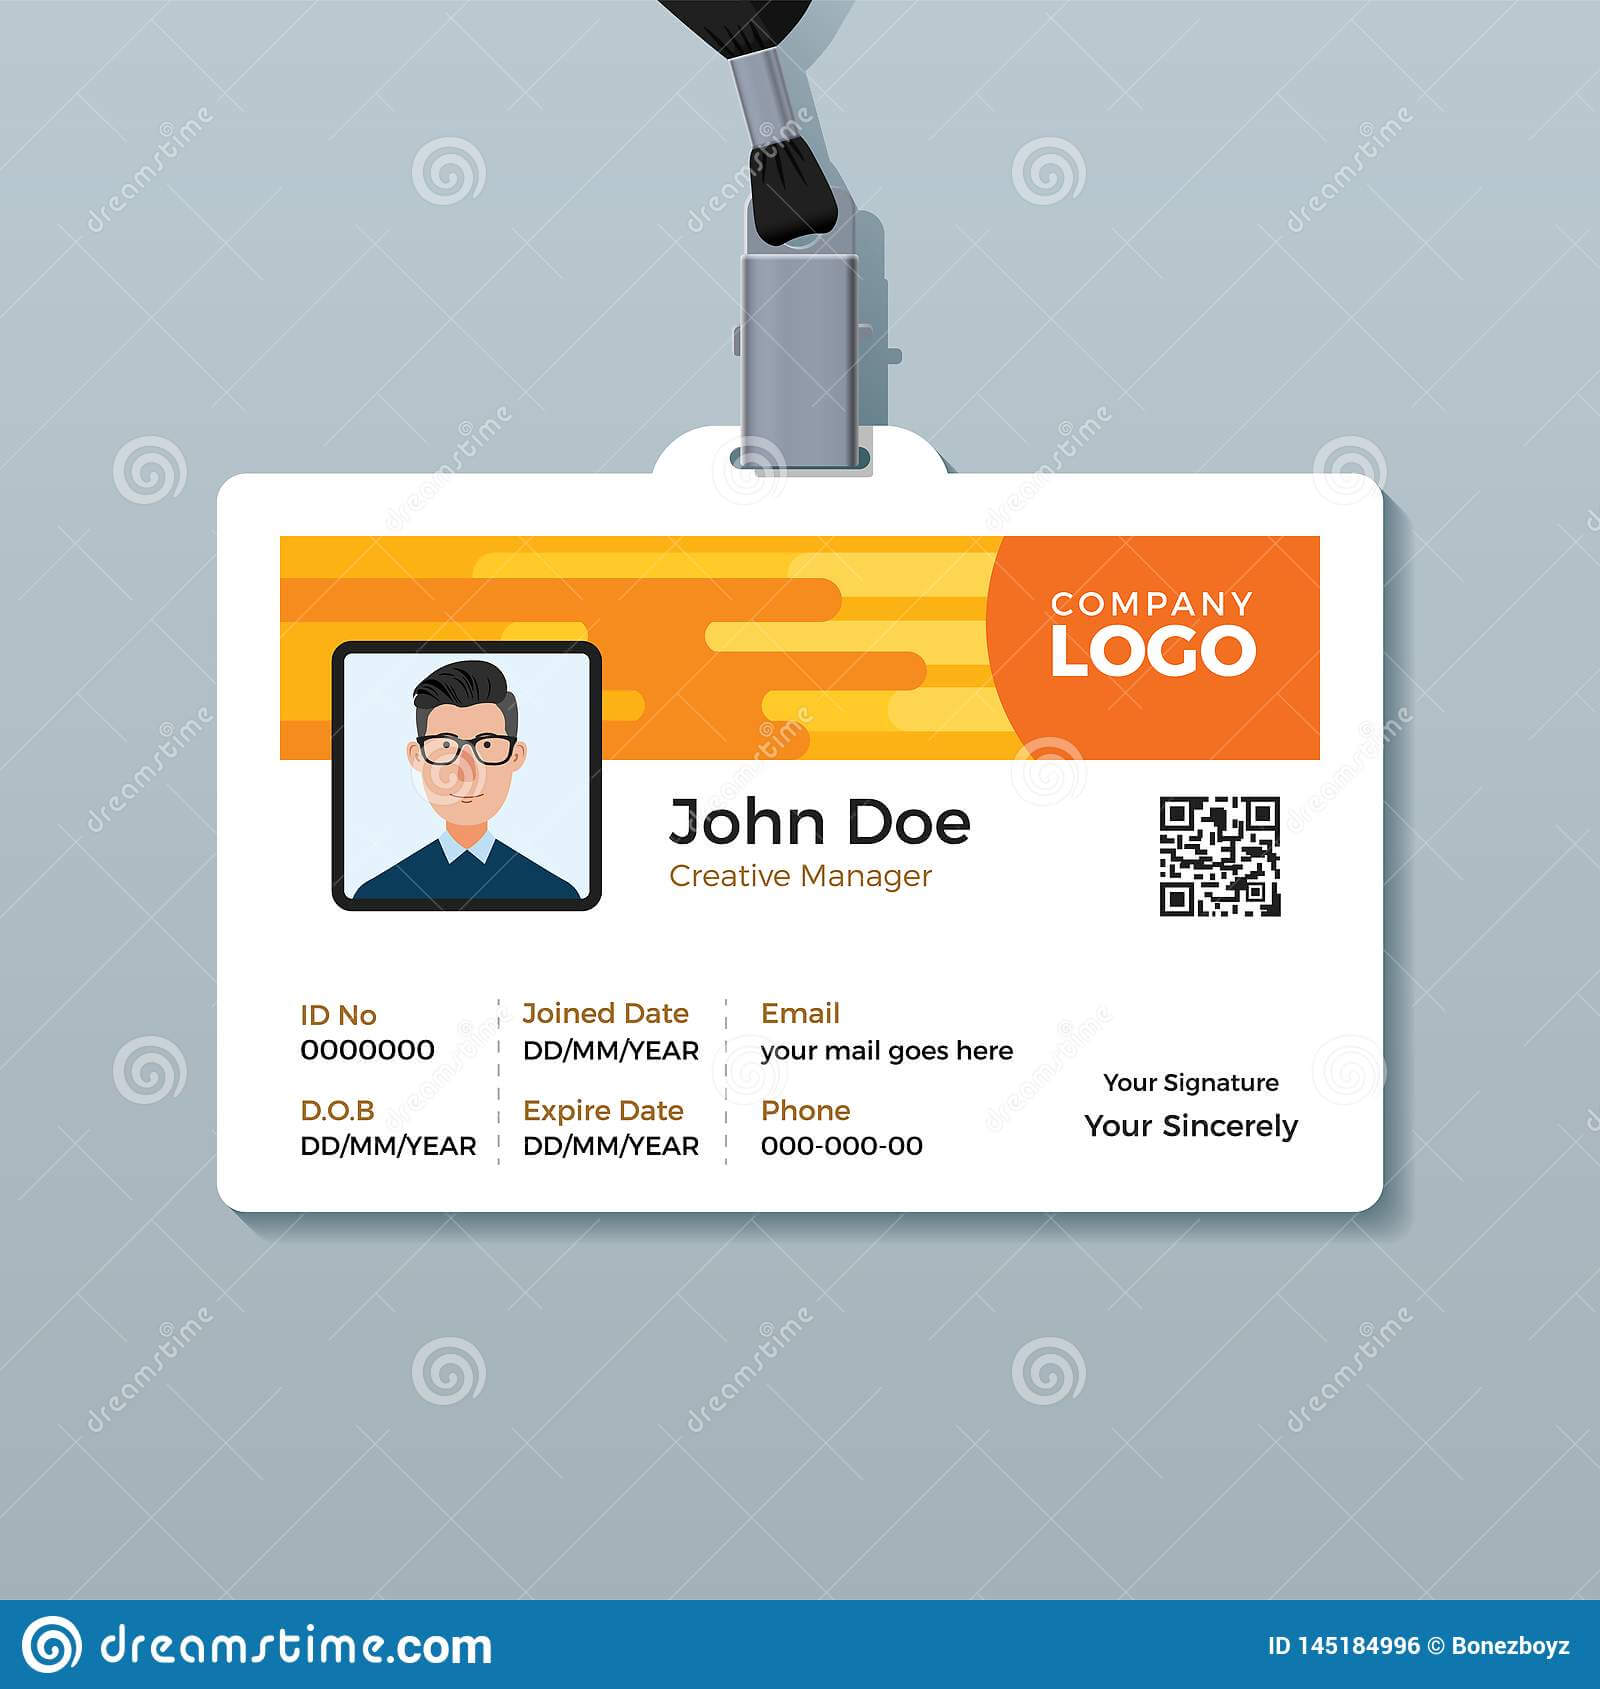 Creative Employee Id Card Design Template Stock Vector Regarding Company Id Card Design Template